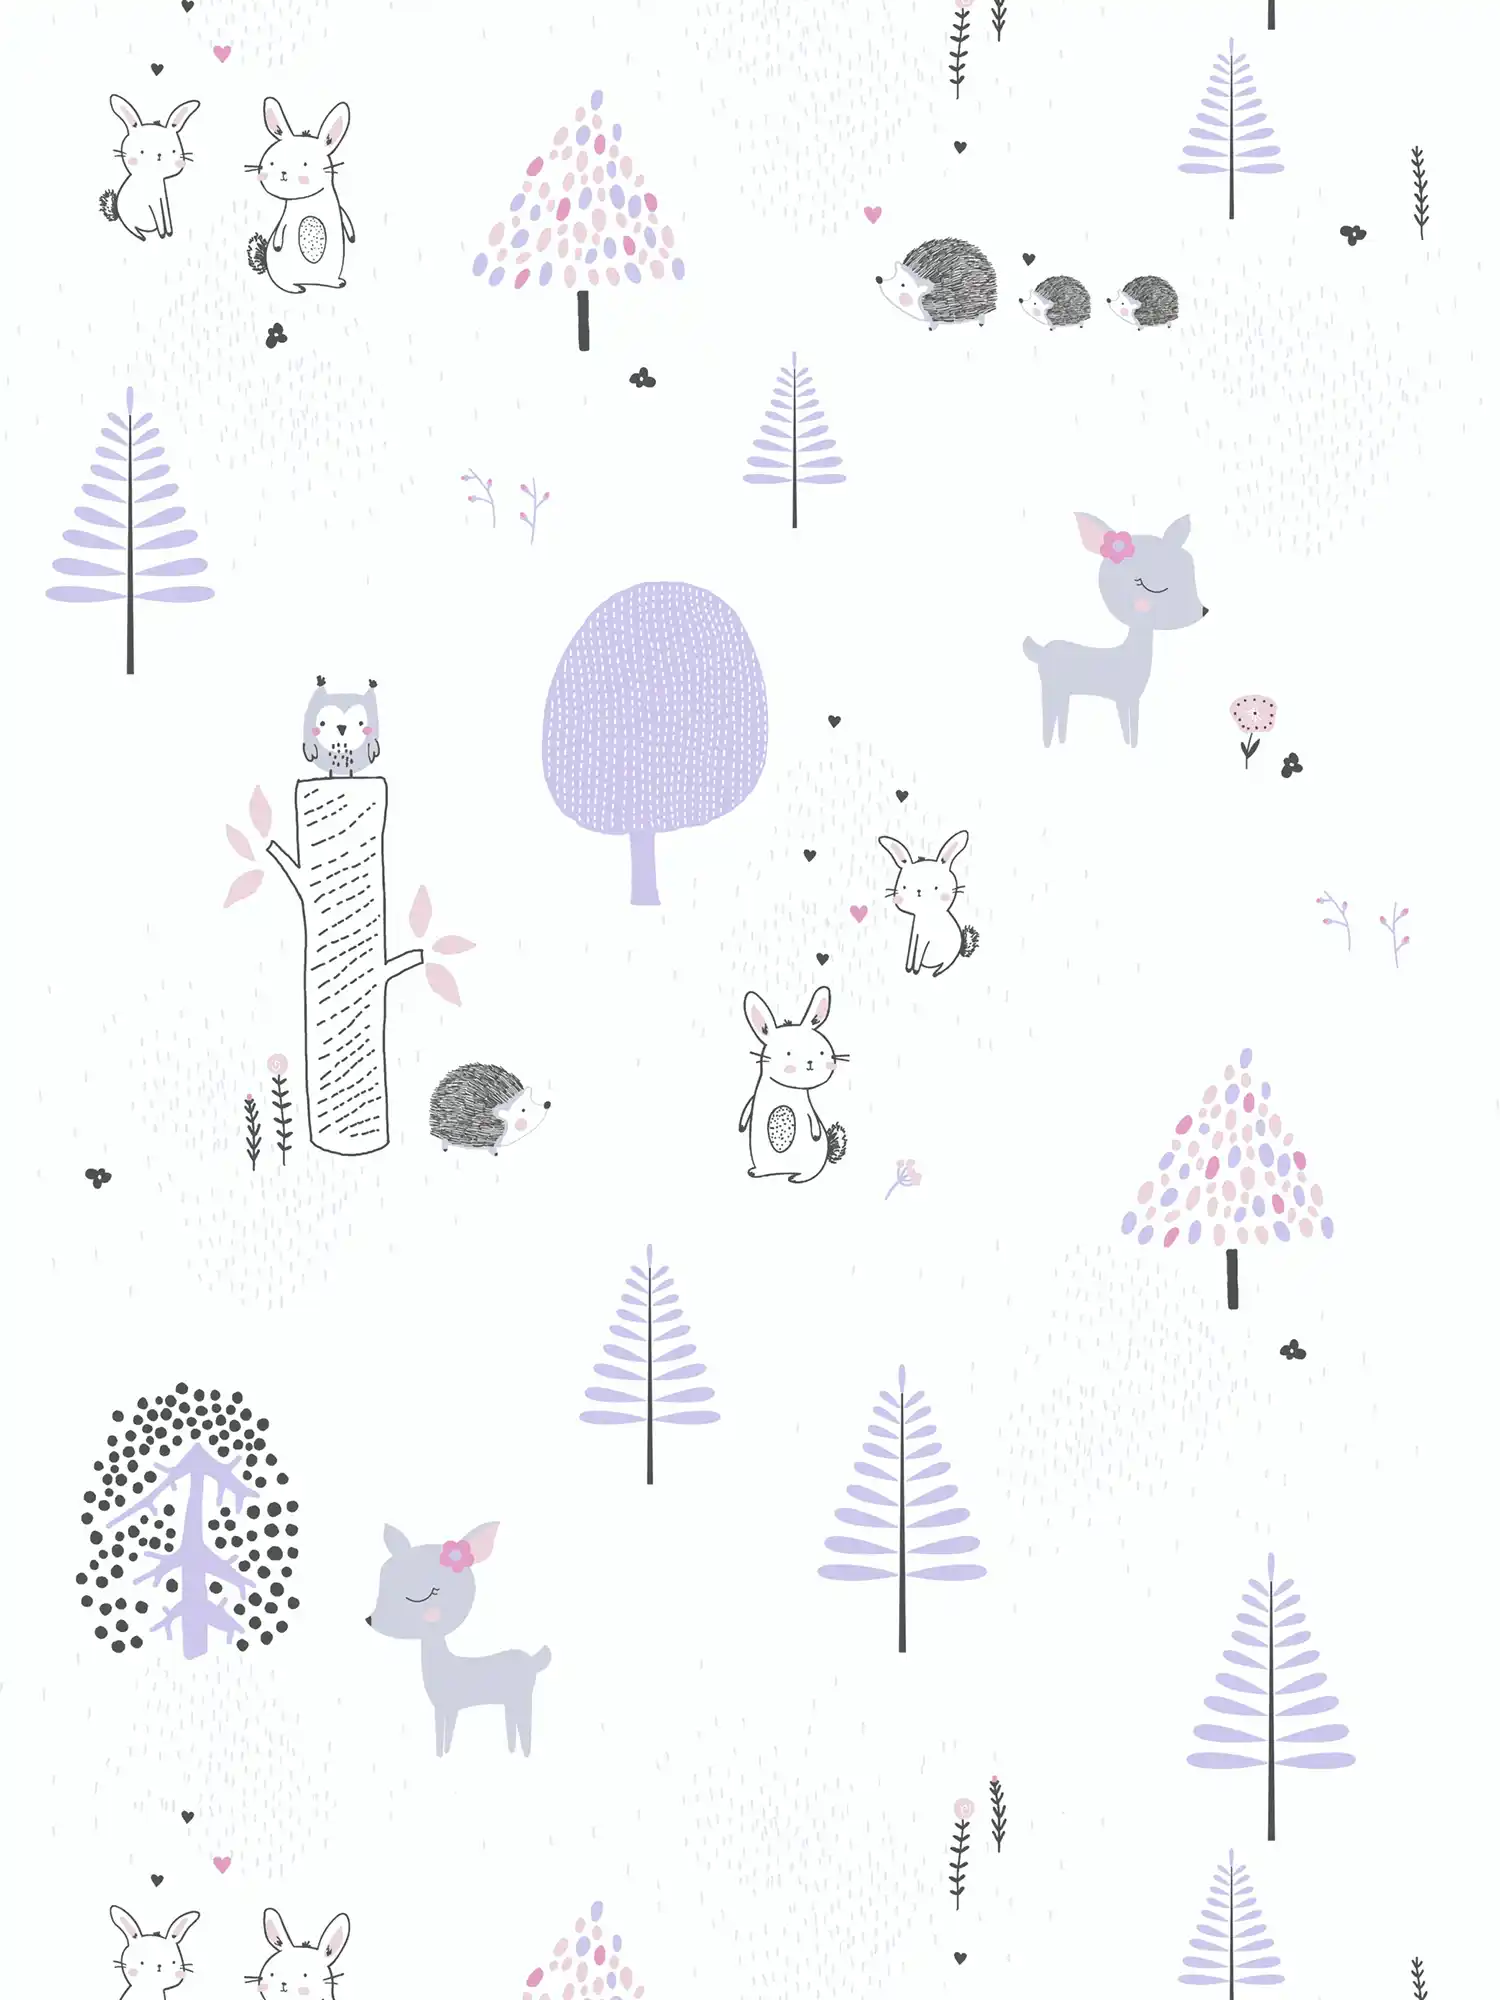         Kinderzimmer Tapete Wald Tiere – Lila, Weiß, Grau
    